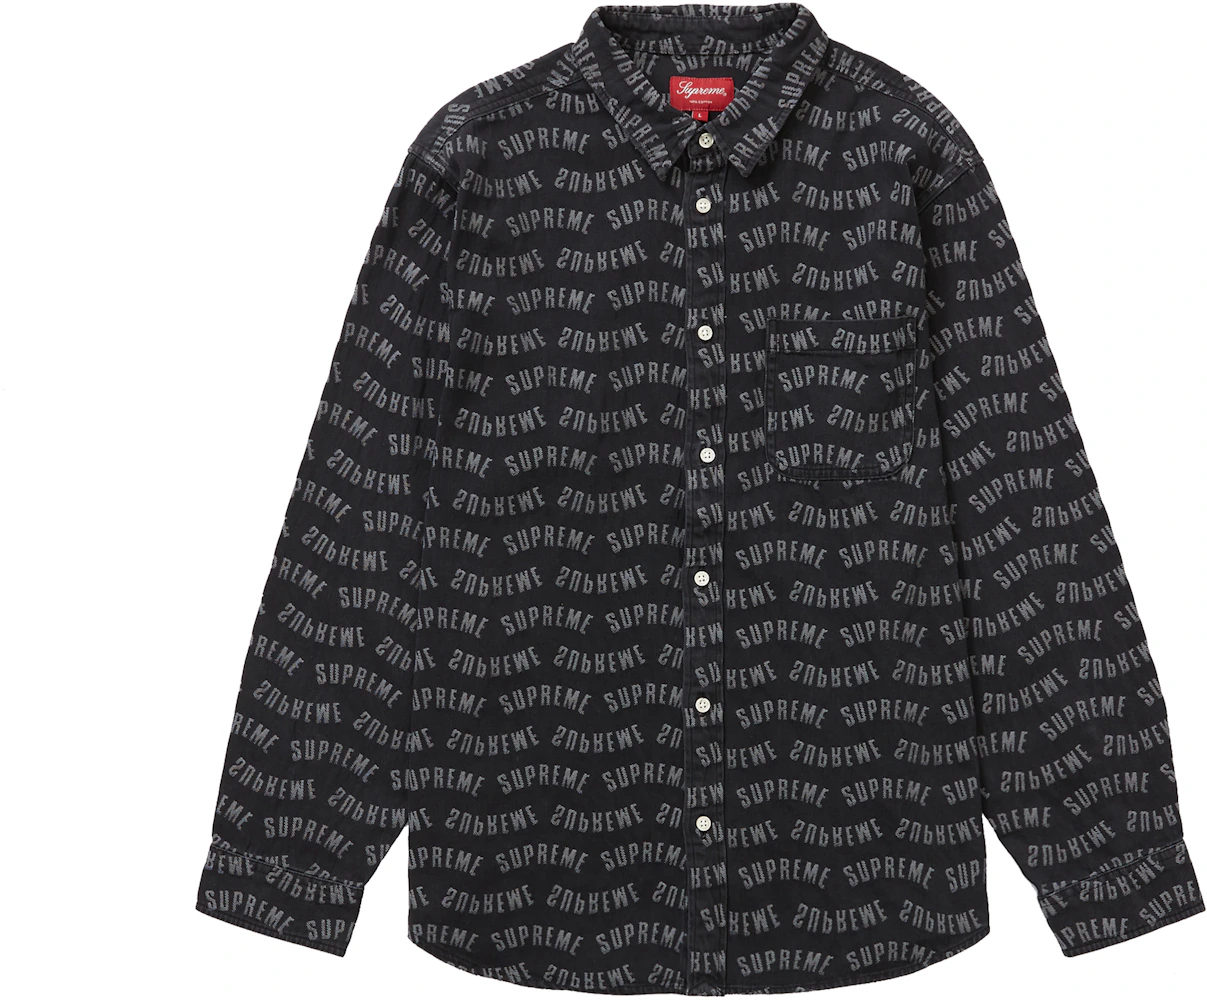 Kool Kiy Supreme Trademark Jacquard Men's Denim Shirt - 'Washed Black' Multi / S